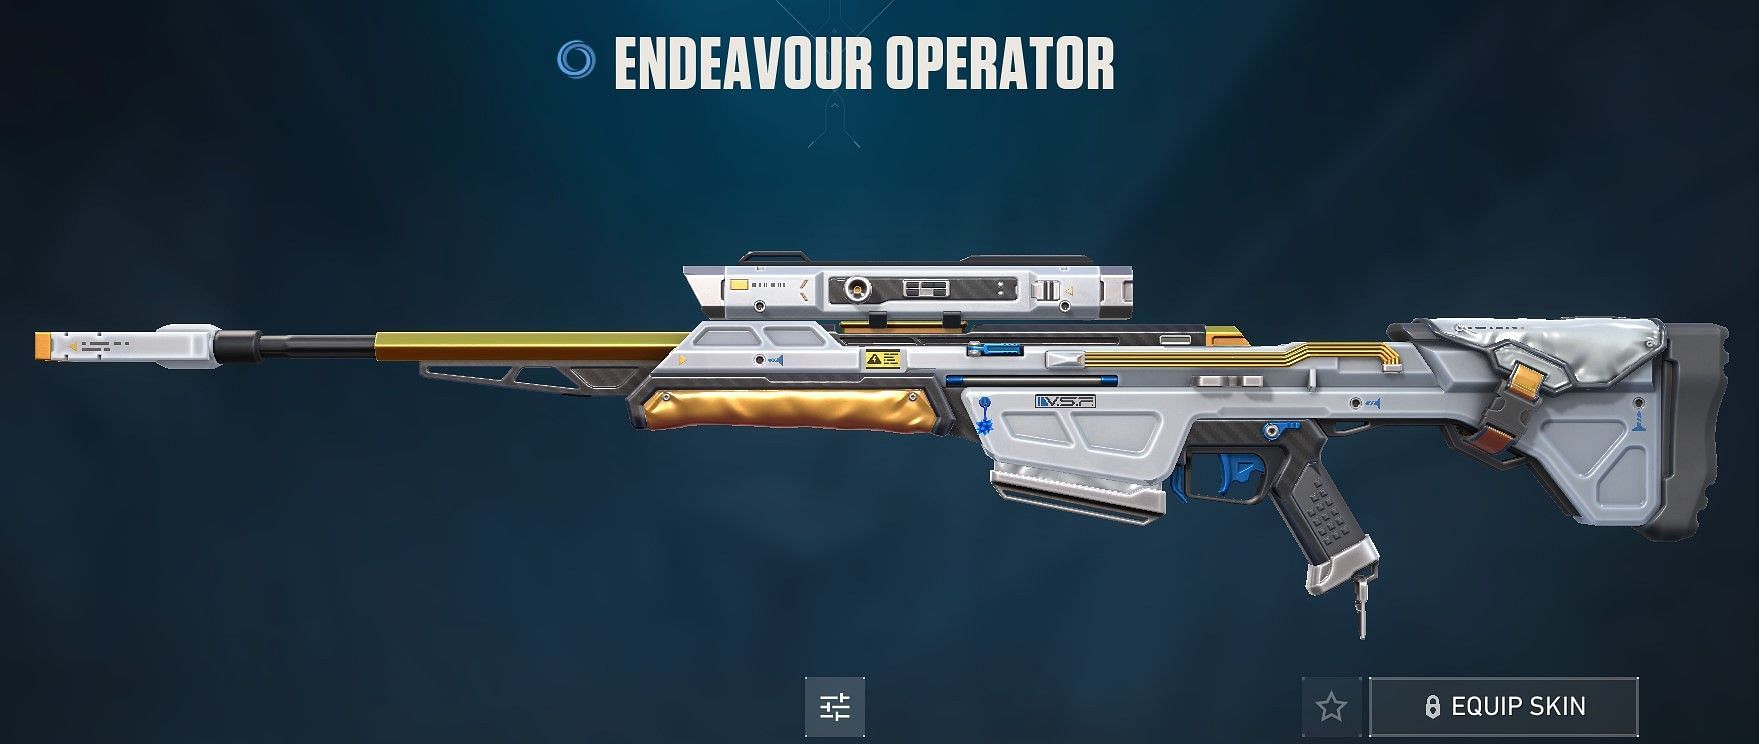 Endeavour Operator (Image via Riot Games)